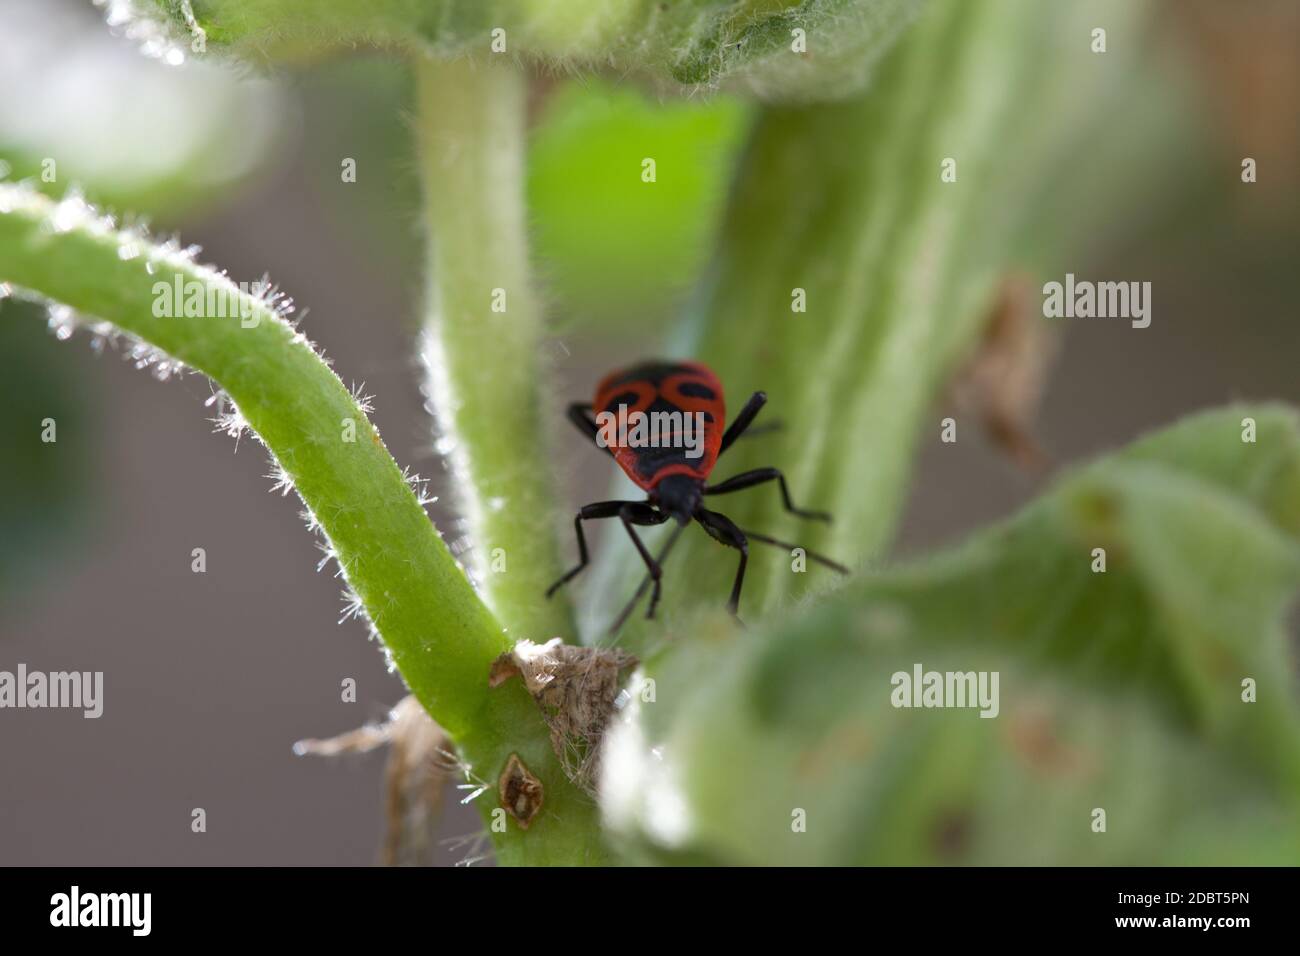 Firebug on a plant Stock Photo